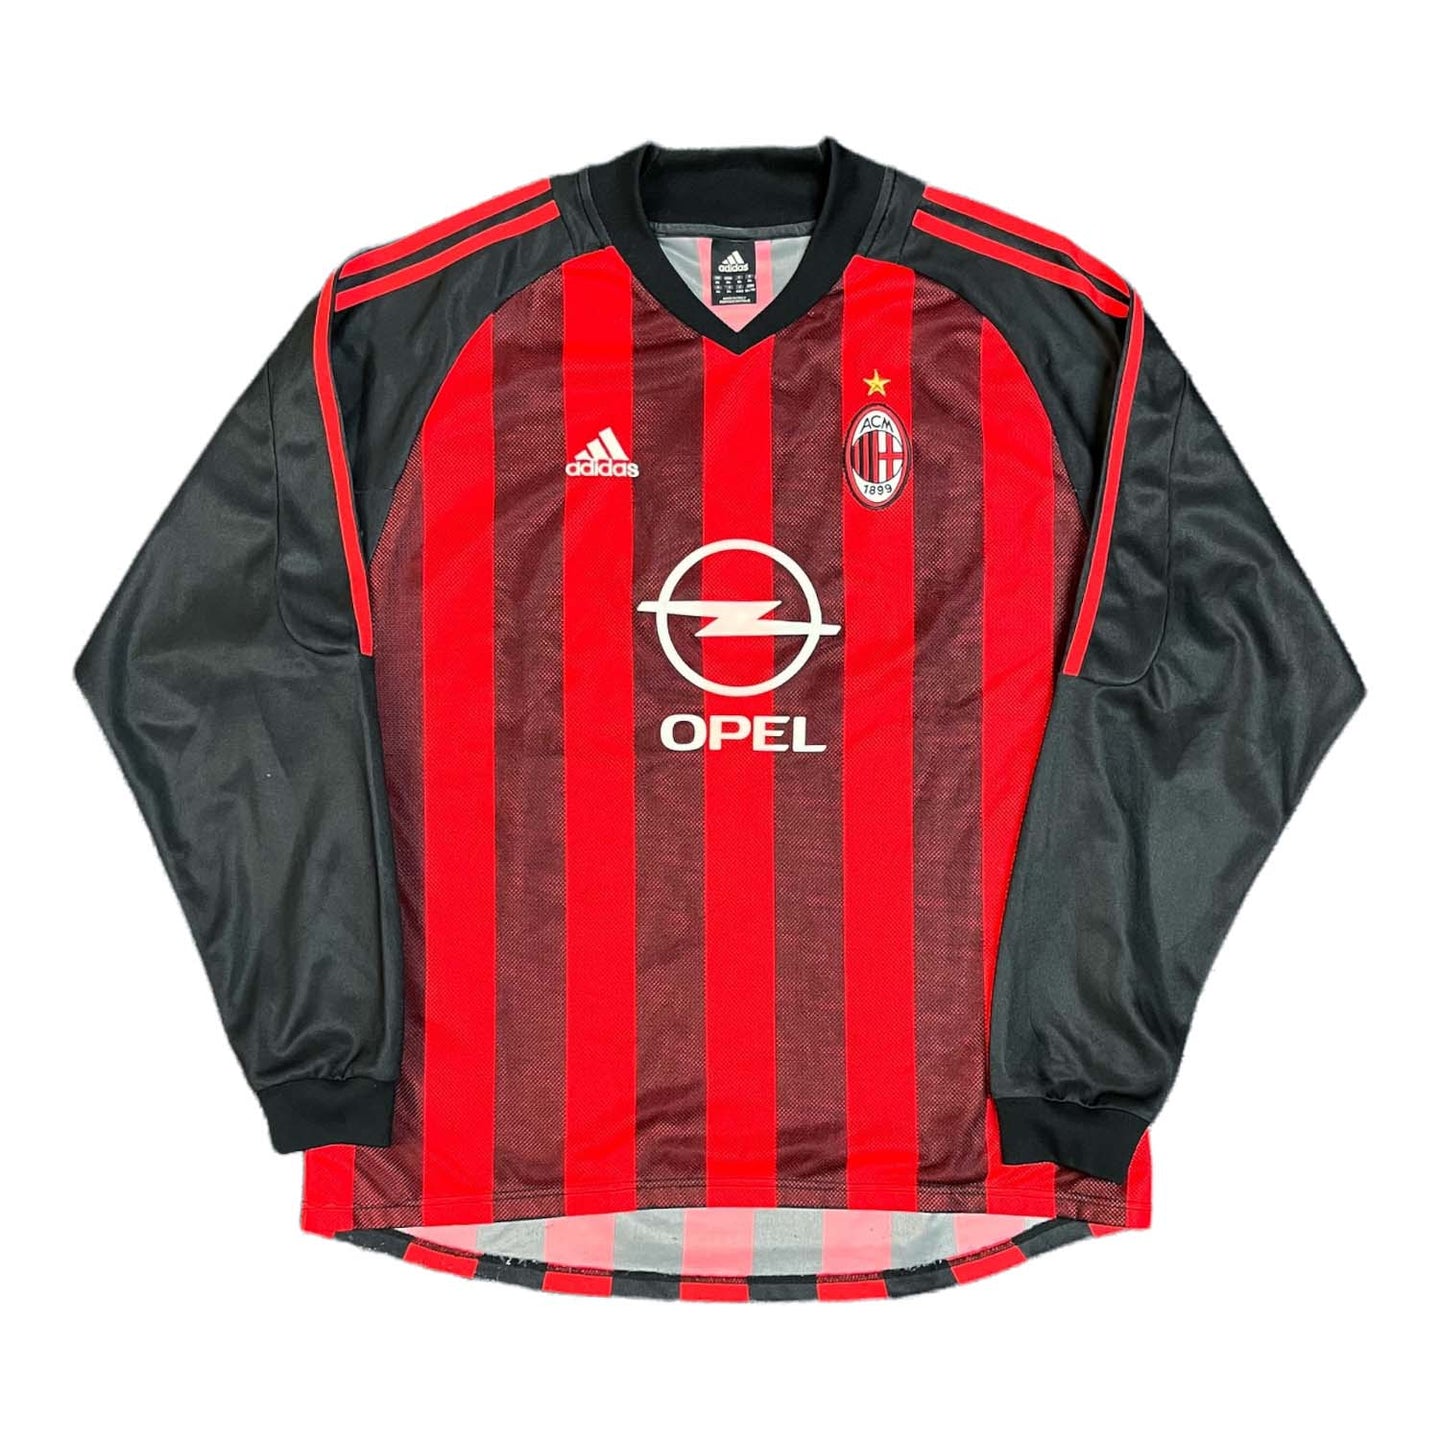 '02-'03 Adidas AC Milan longsleeve jersey XL